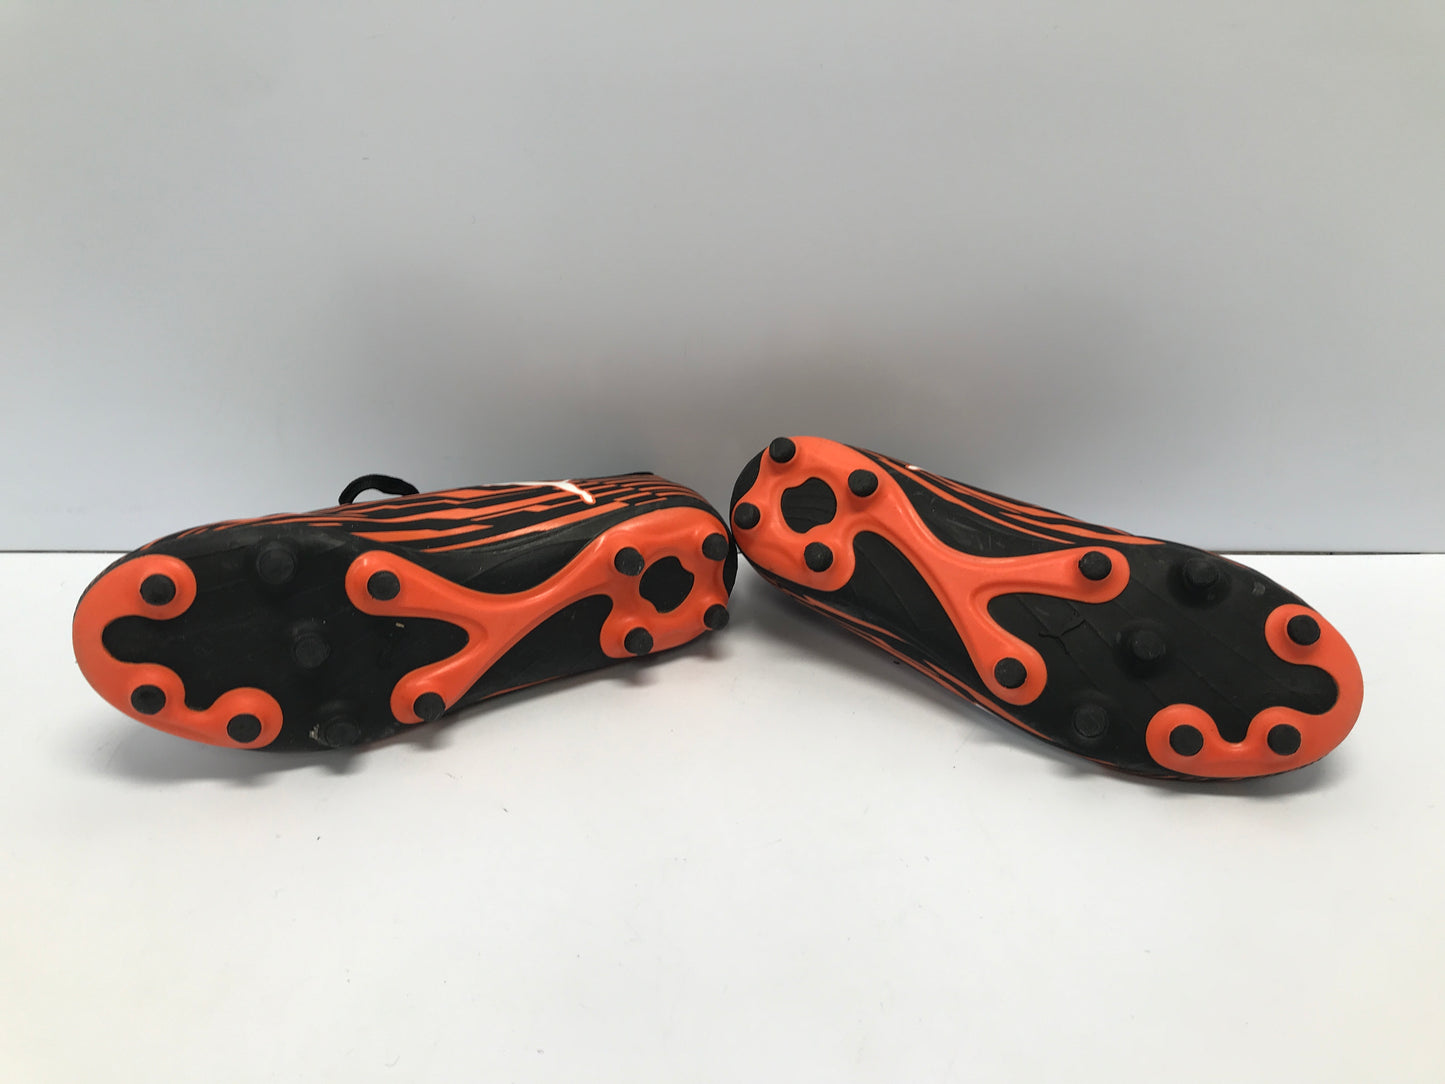 Soccer Shoes Cleats Child Size 4 Puma Tangerine Black Excellent